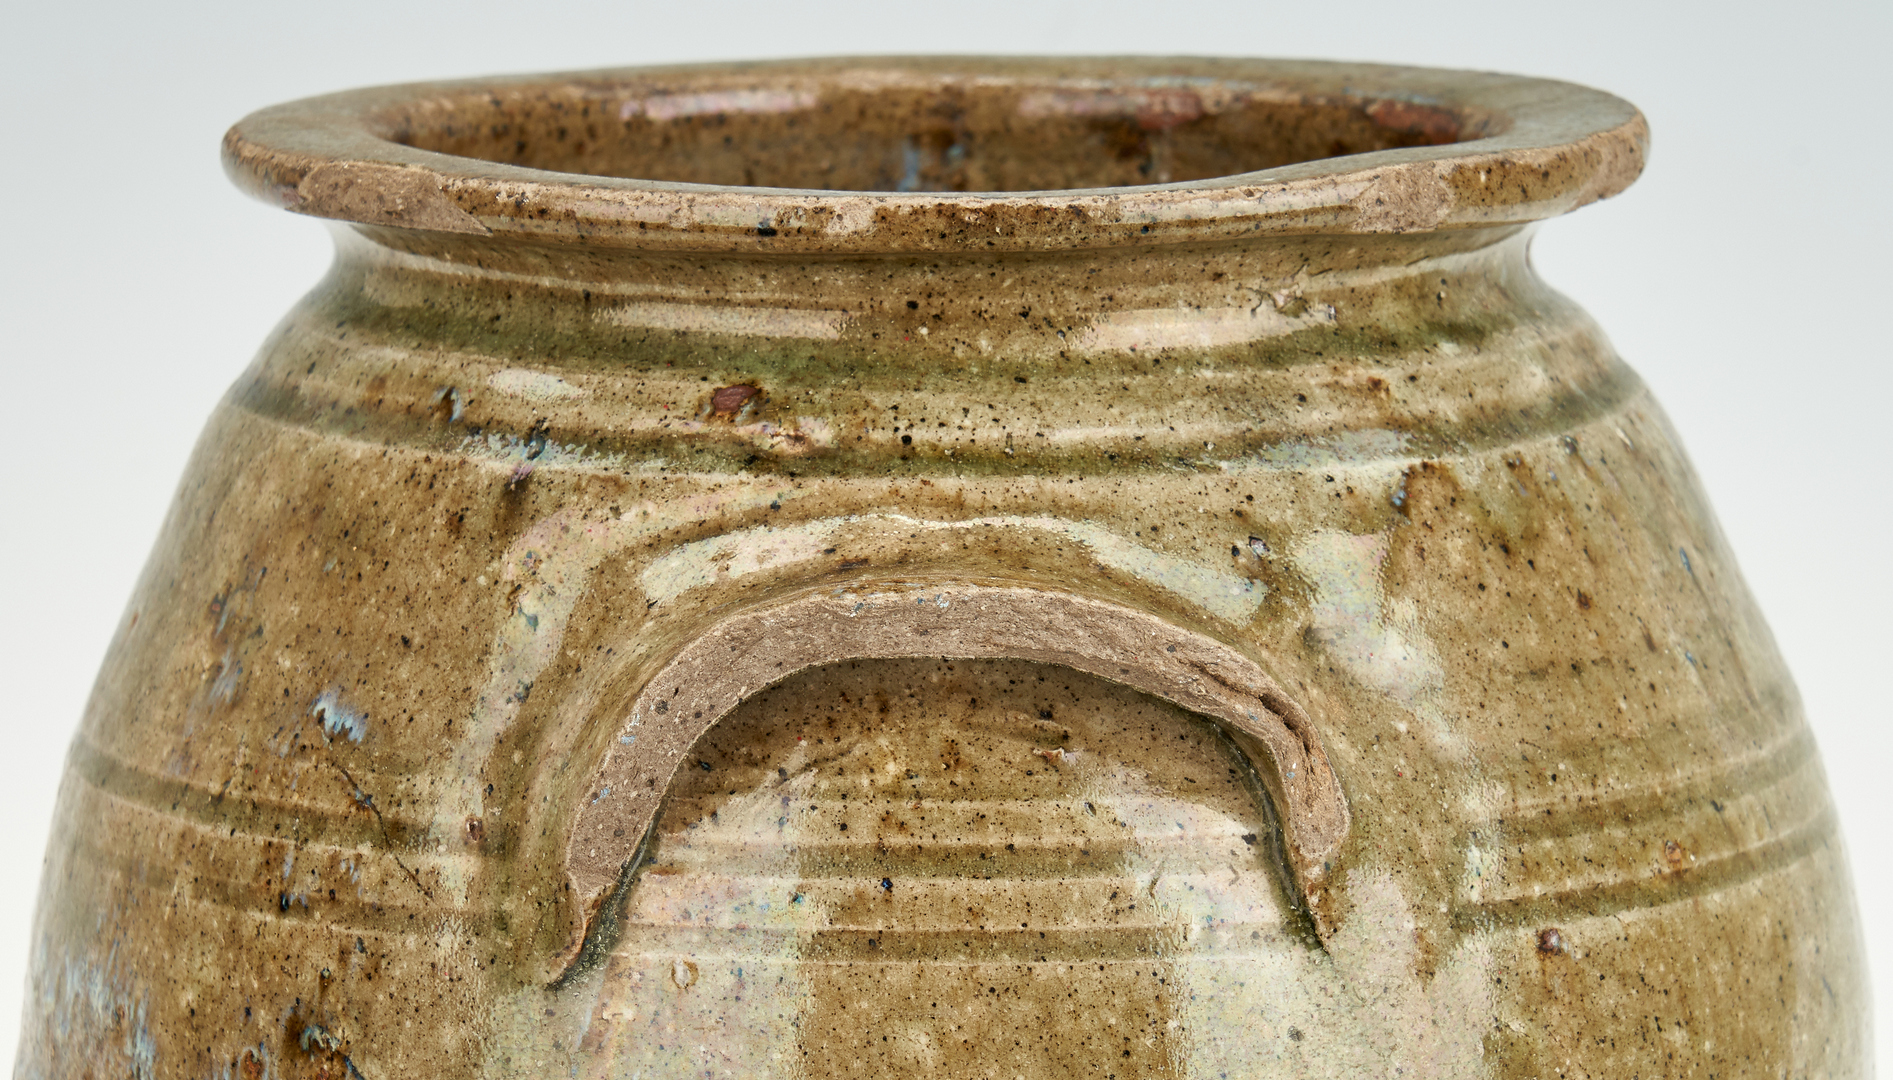 Lot 859: 3 NC Alkaline Glazed Pottery Jars